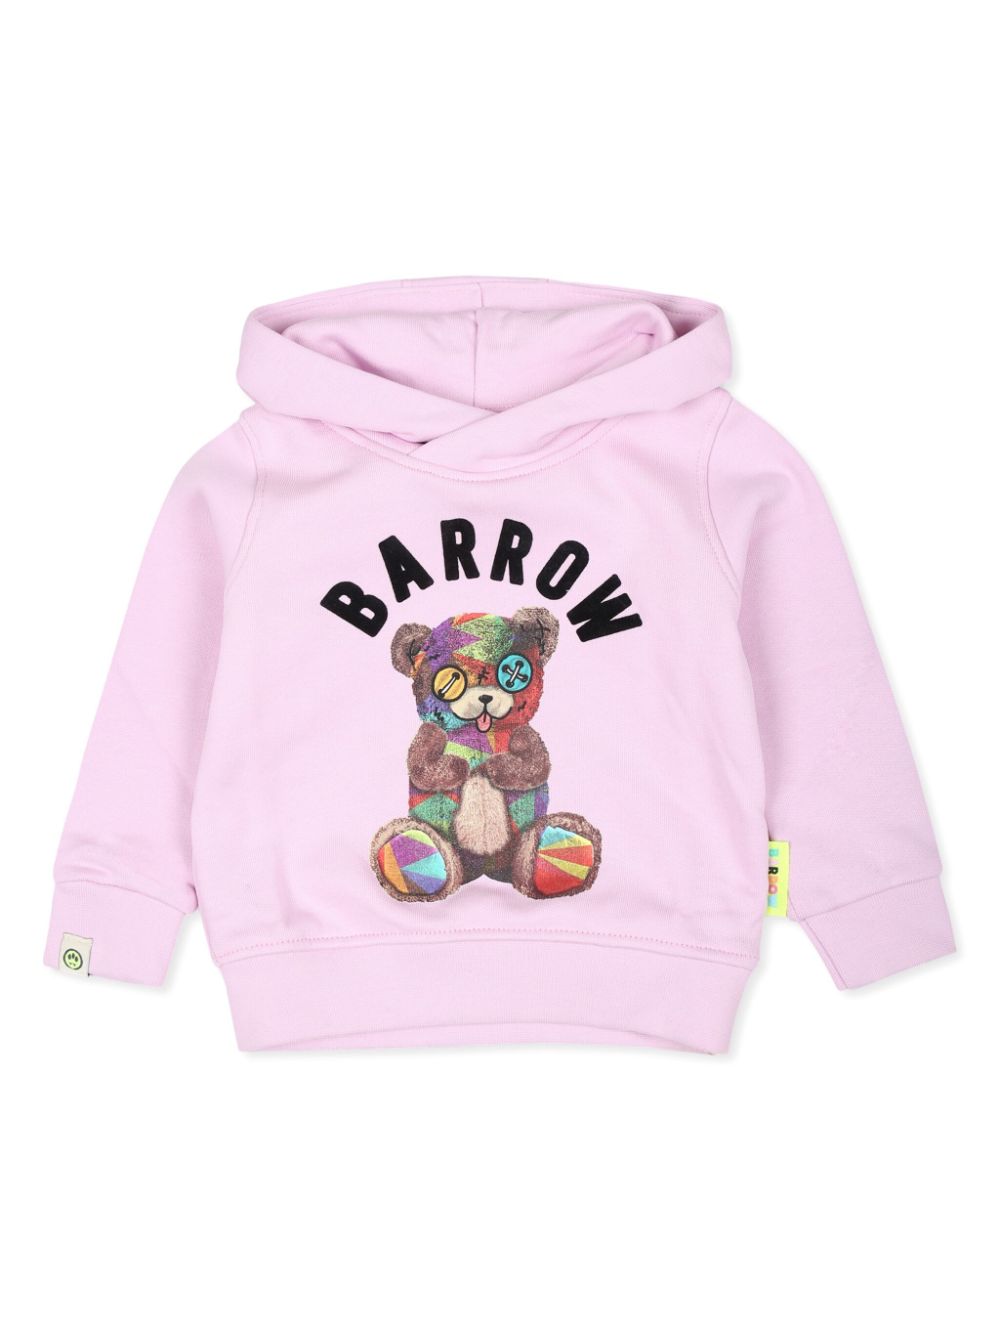 Barrow kids logo-print cotton hoodie - Pink von Barrow kids